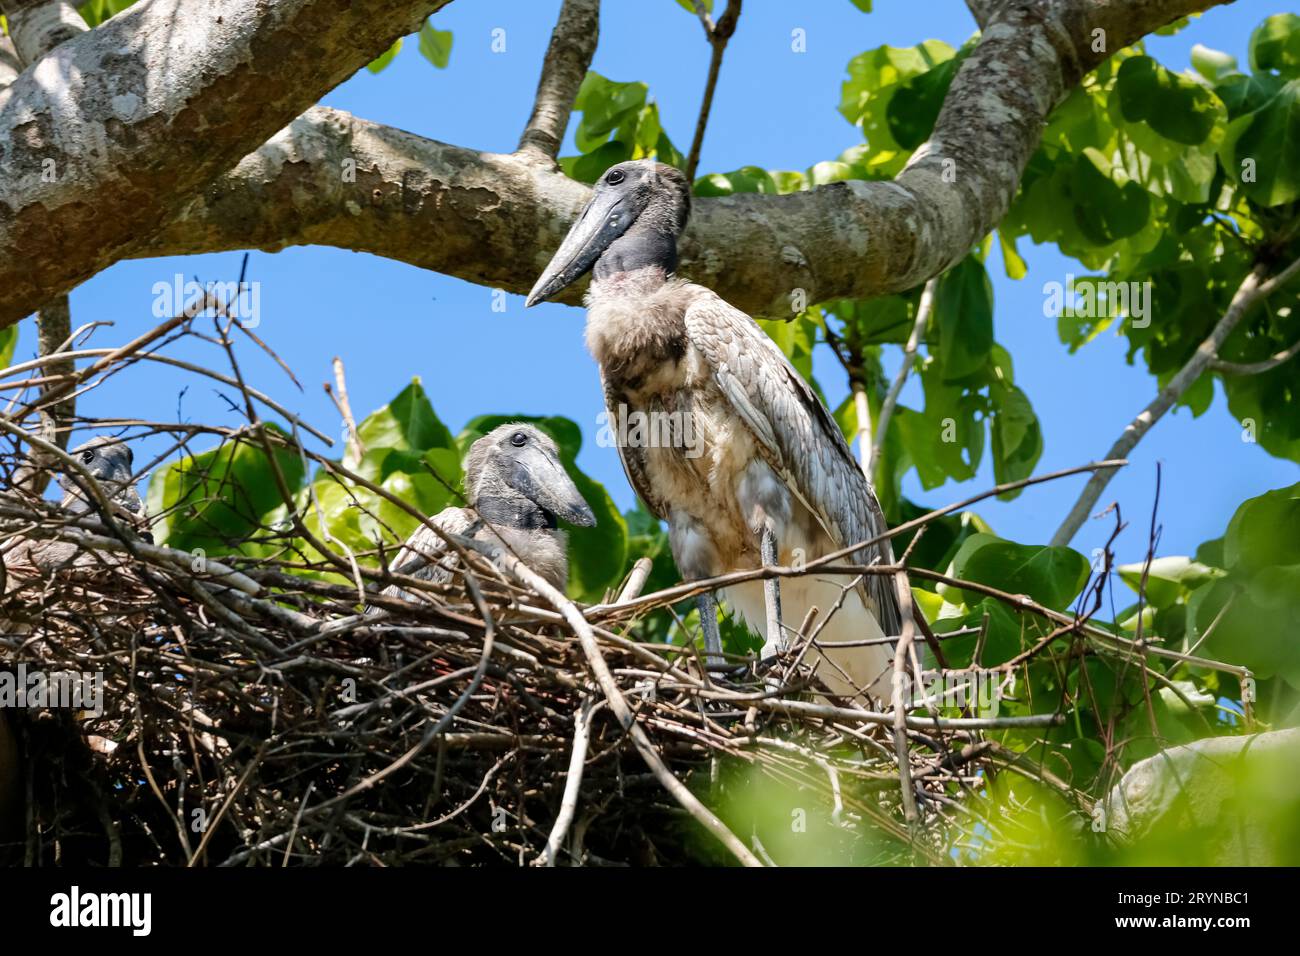 Two Jabiru storks nestlings storks perching in their nest in a green tree, Pantanal Wetlands,Brazil Stock Photo